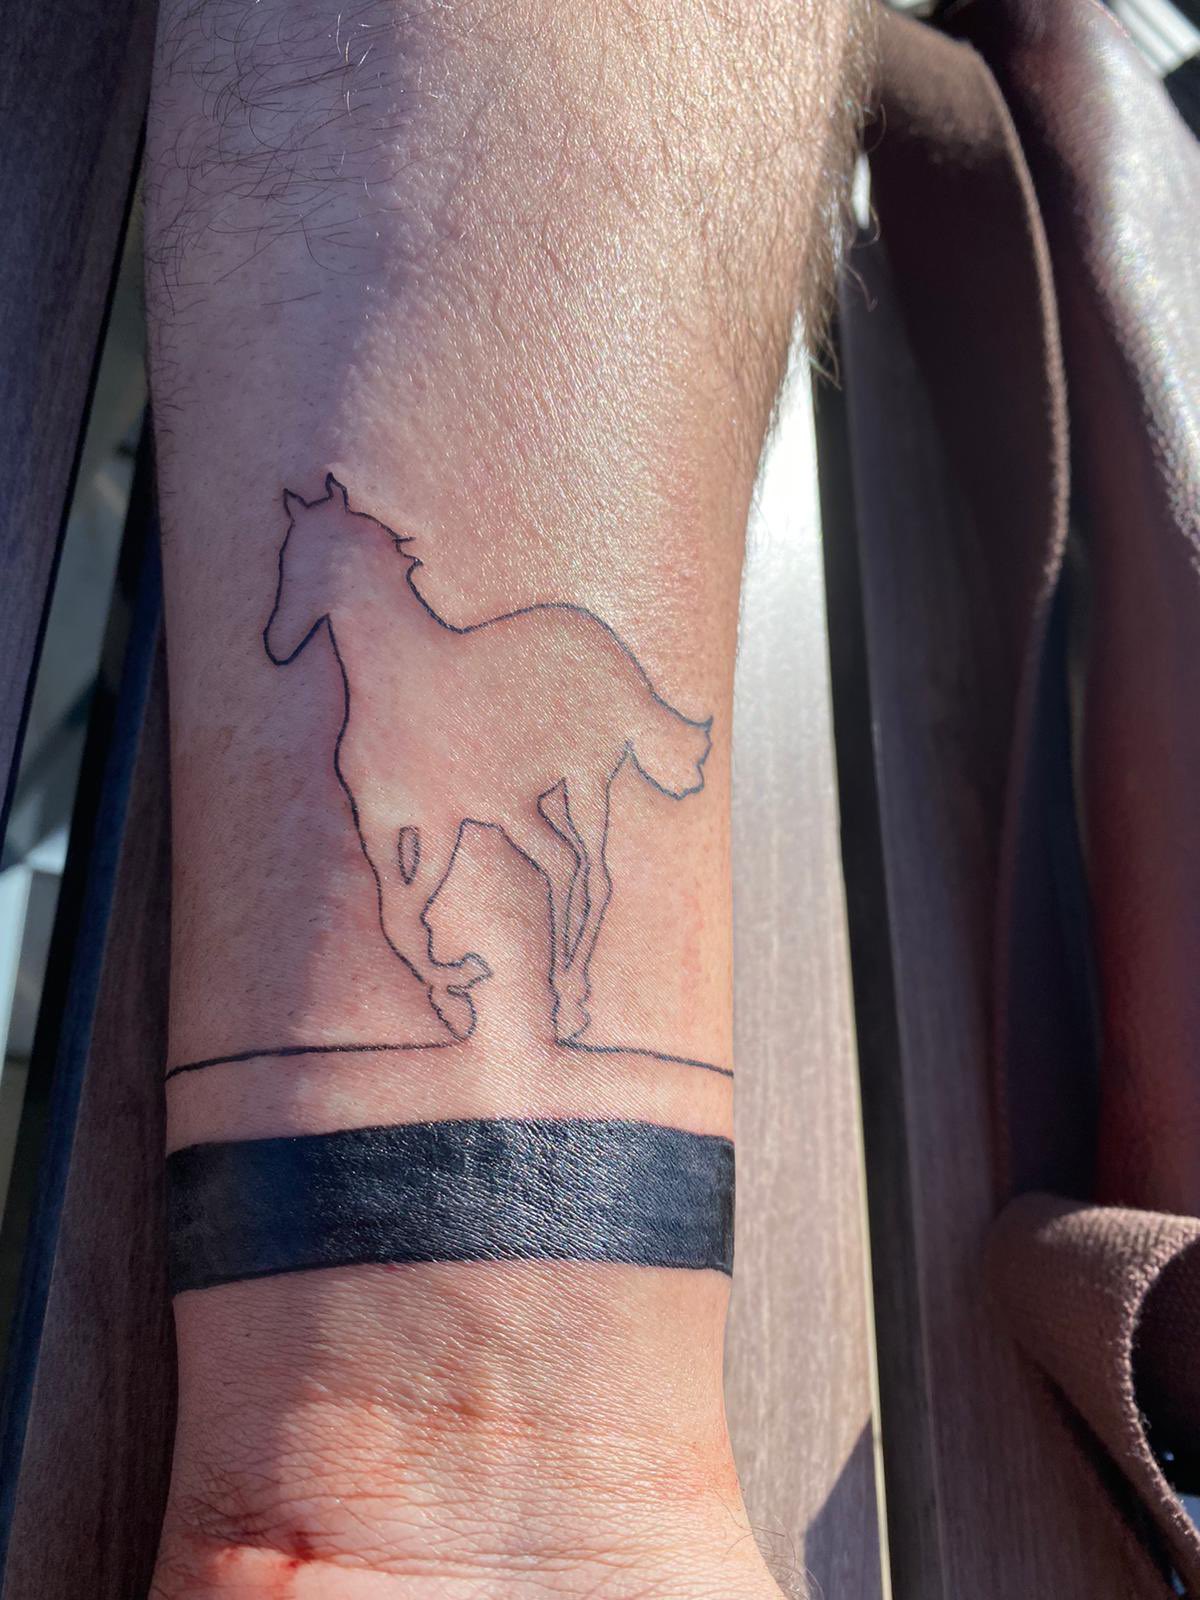 Bosch Deftones White Pony Tattoo  Album on Imgur